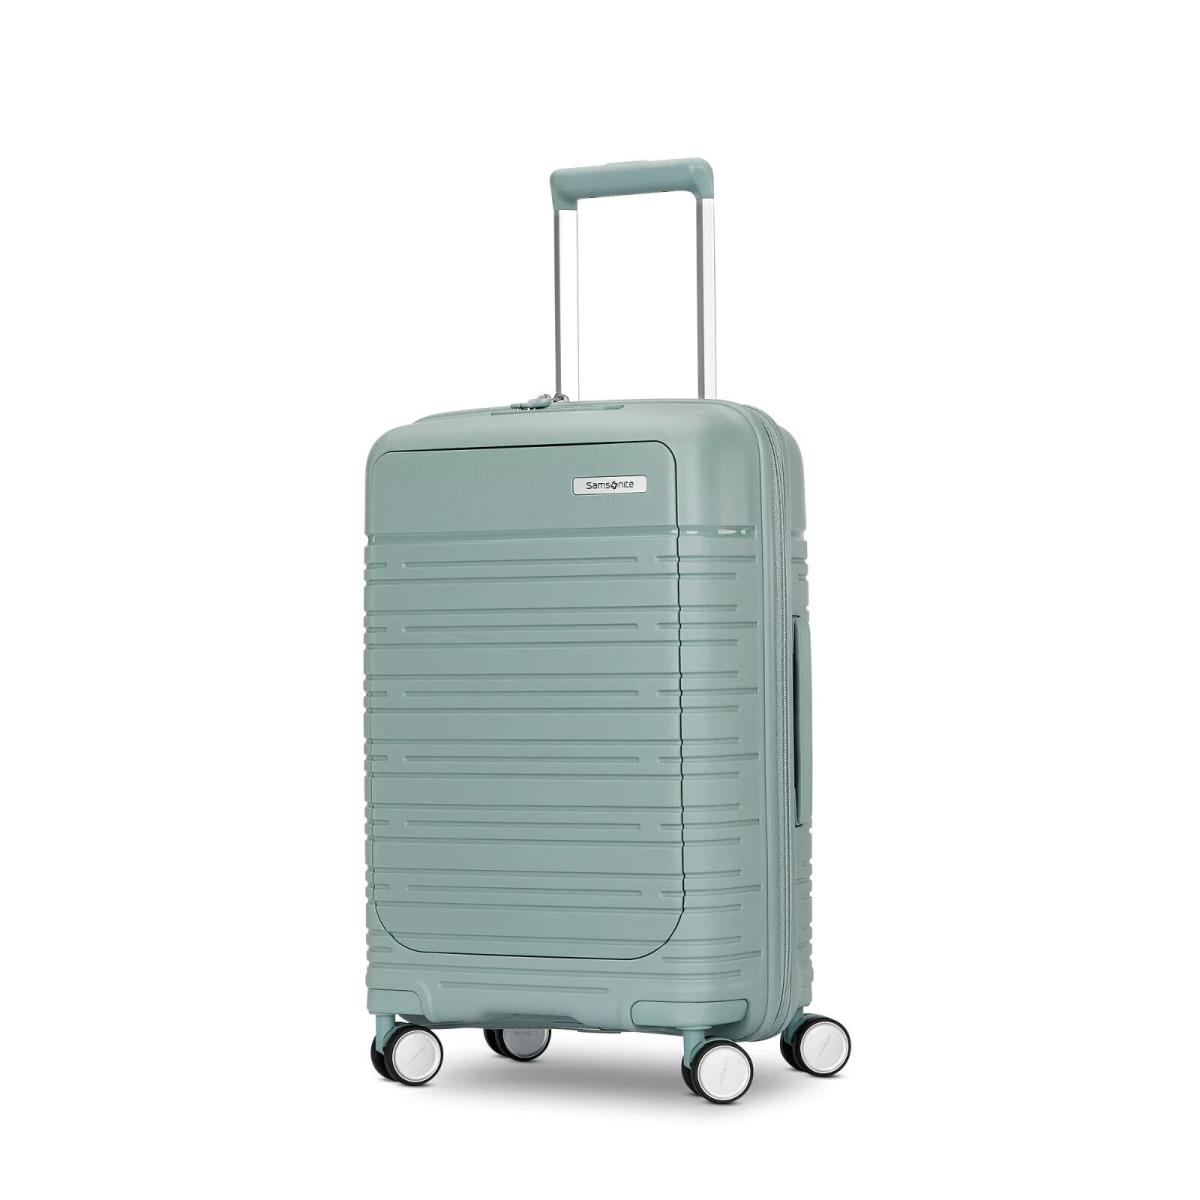 Samsonite Green 22 Elevation Plus Hardside Spinner Luggage T1160